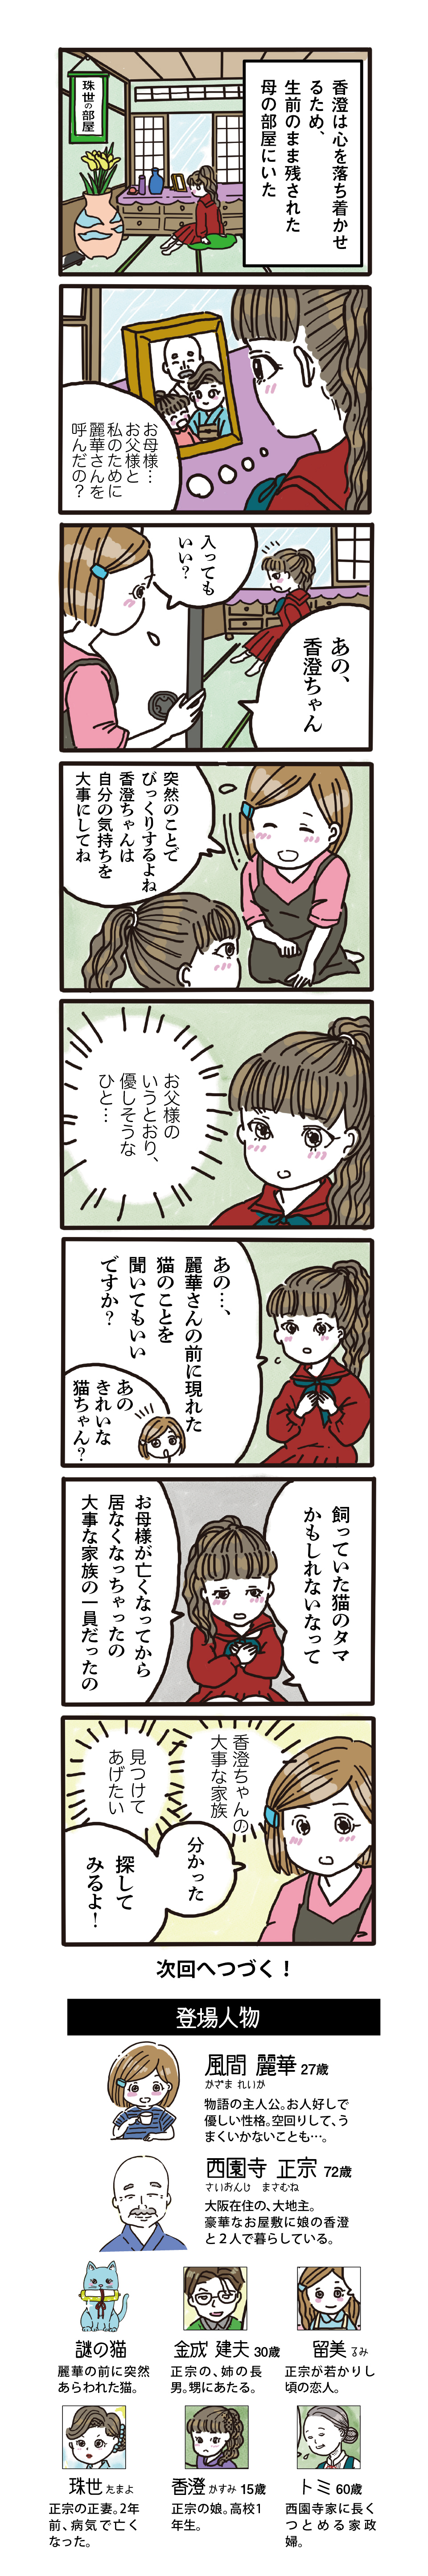 【web漫画】華麗なるSOUZOKU  #8